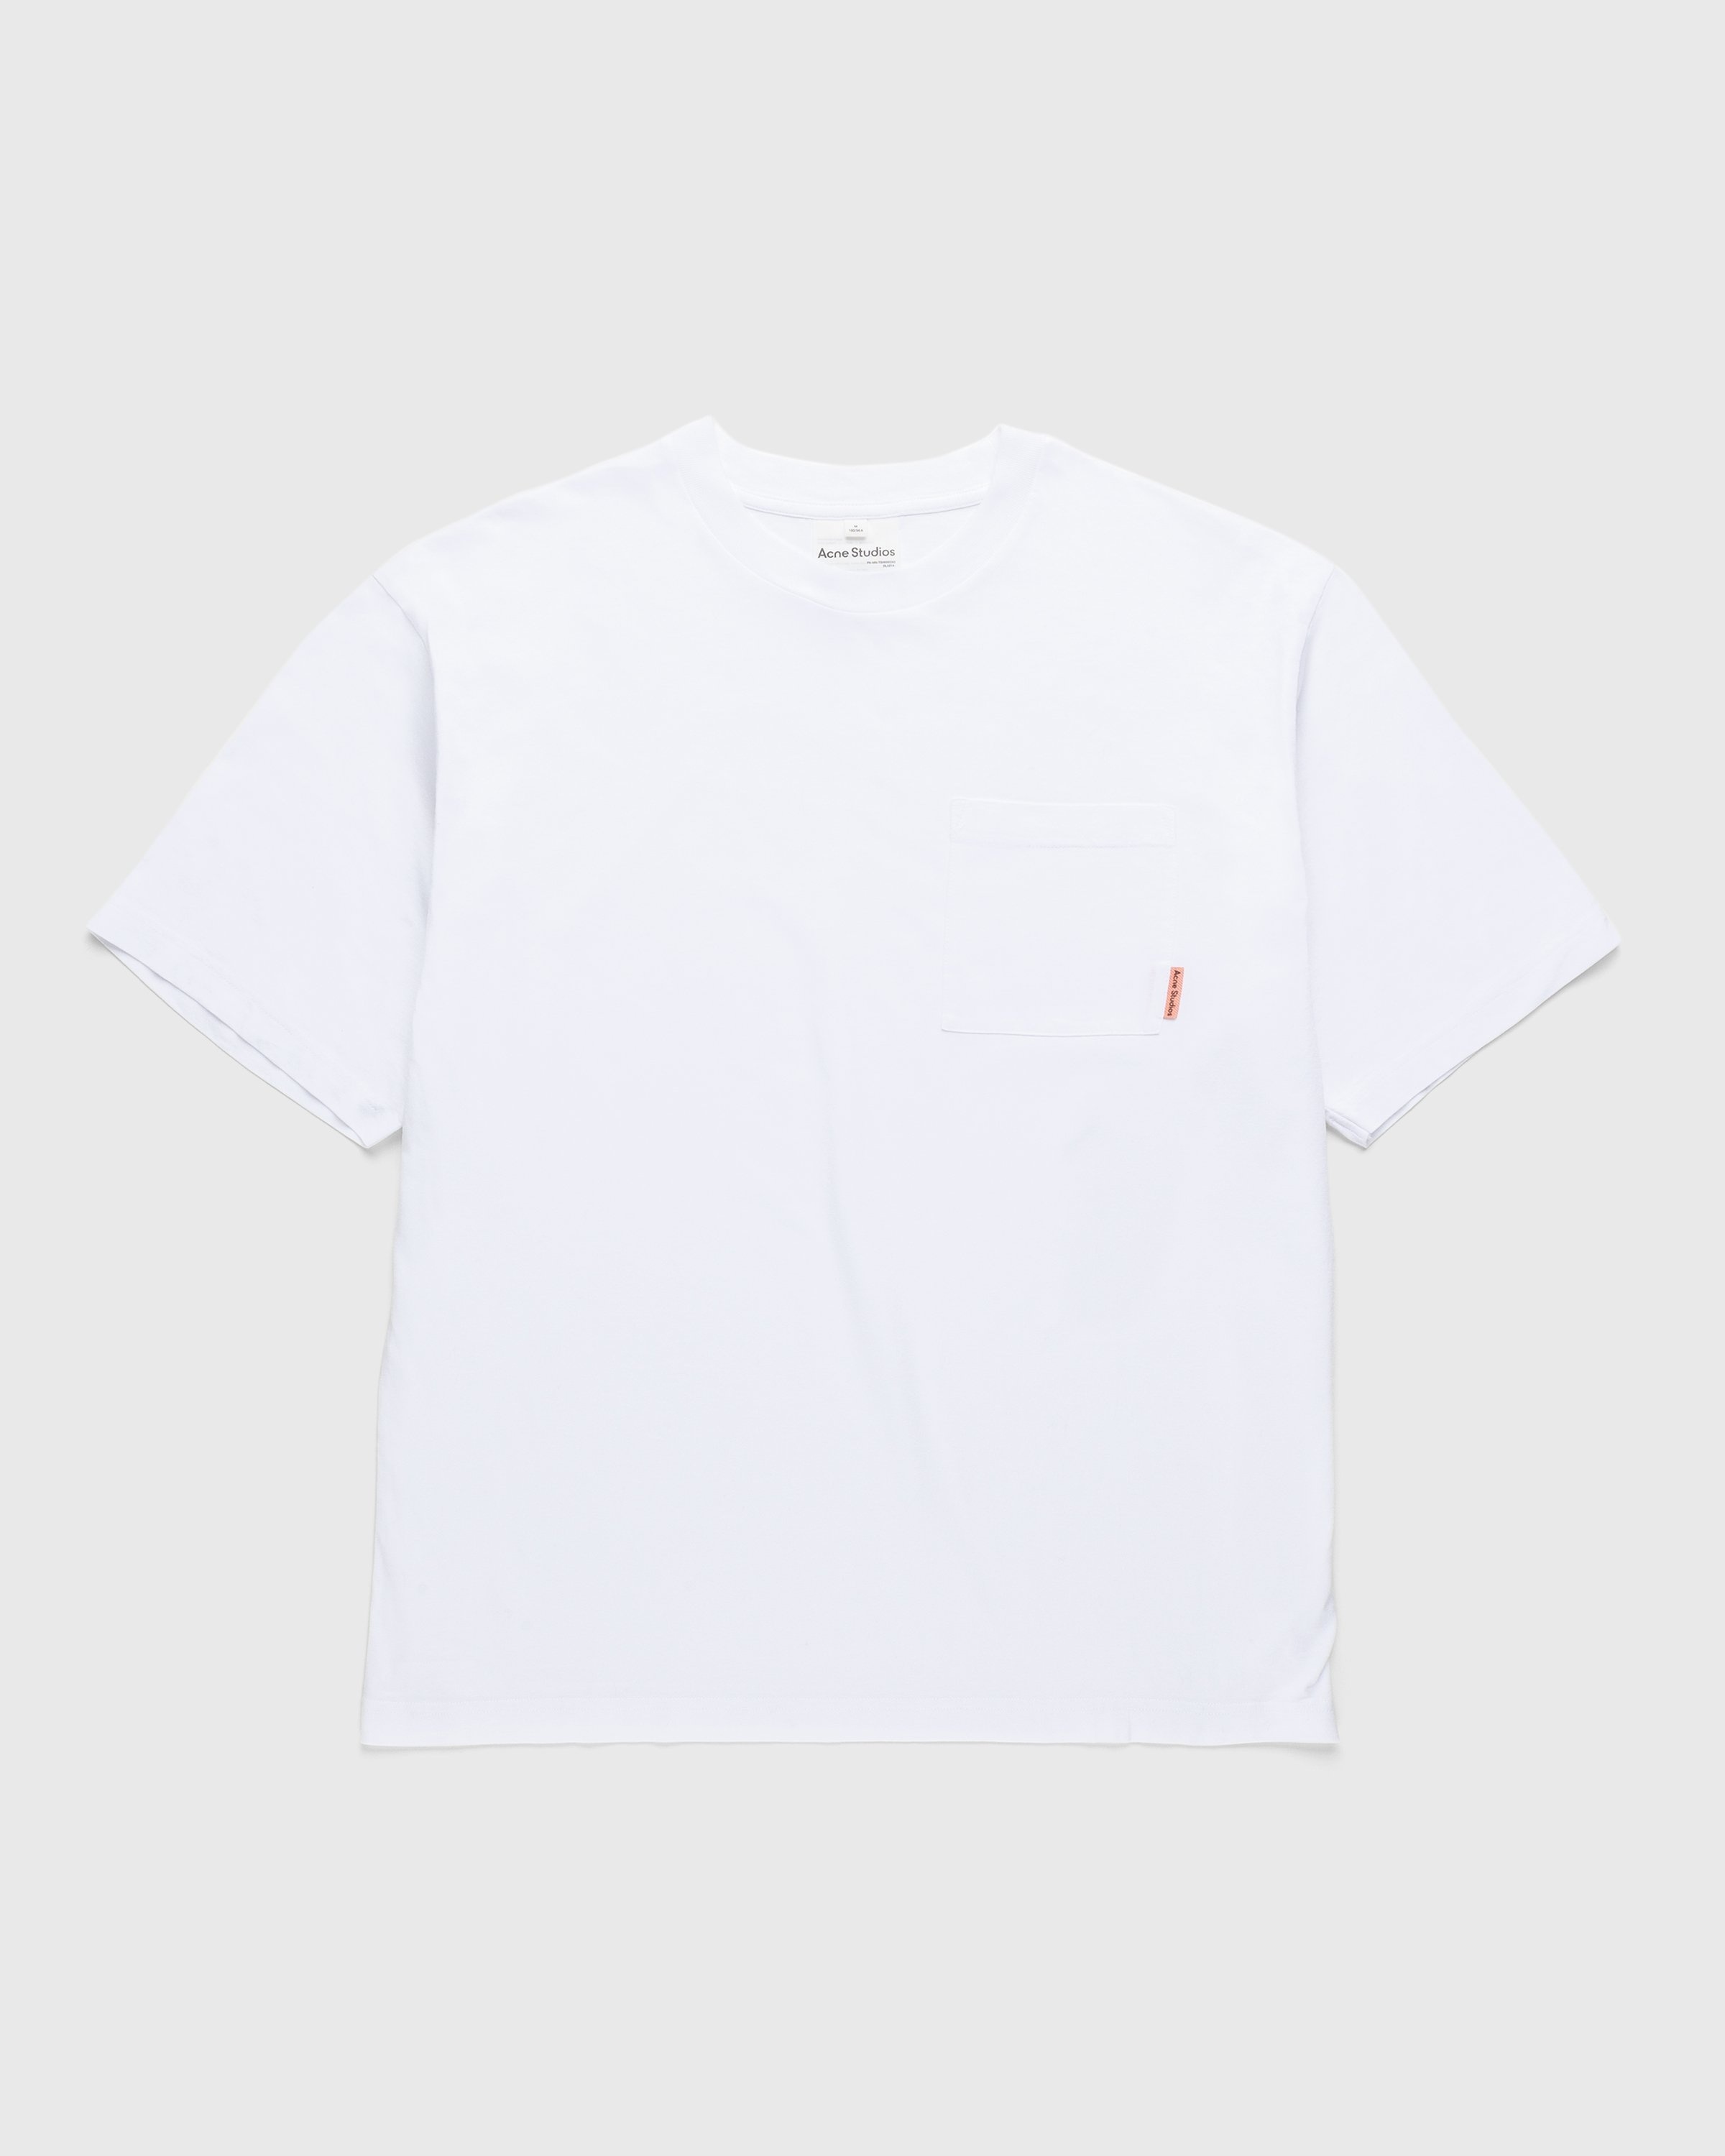 Acne Studios – Organic Cotton Pocket T-Shirt White - T-Shirts - White - Image 1